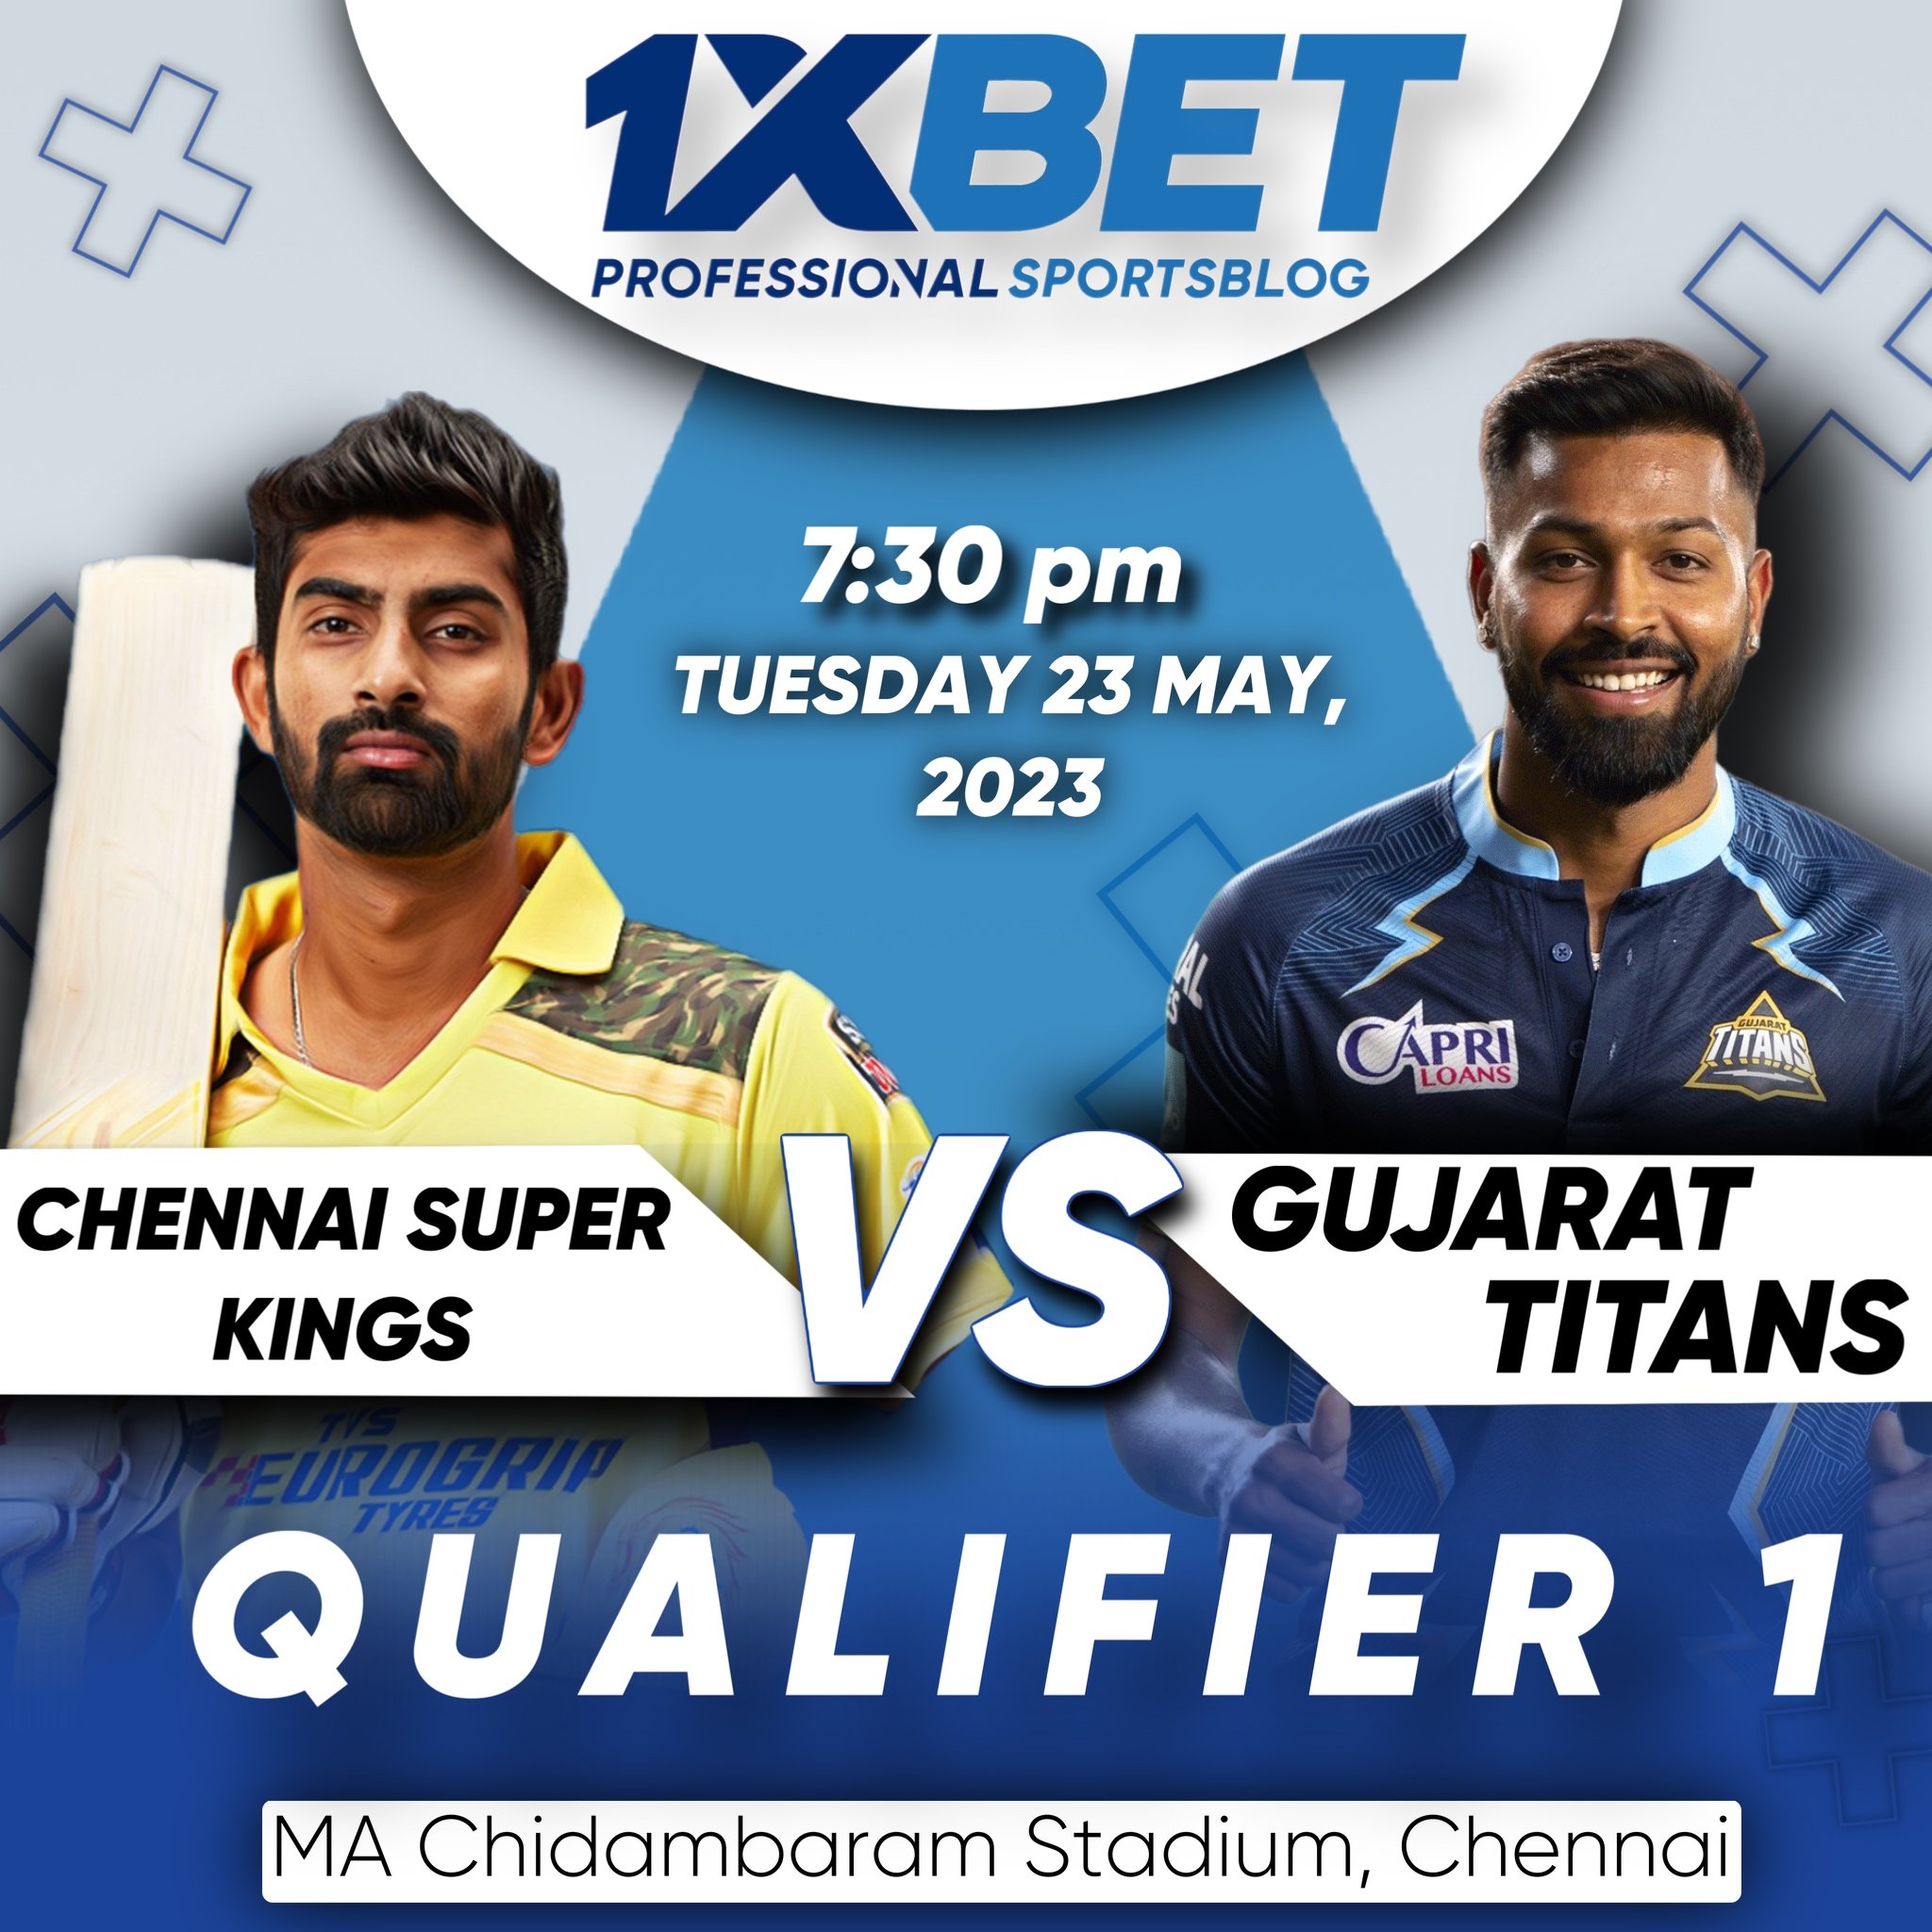 Gujarat Titans vs Chennai Super Kings, IPL 2023, Qualifier 1 Match Analysis